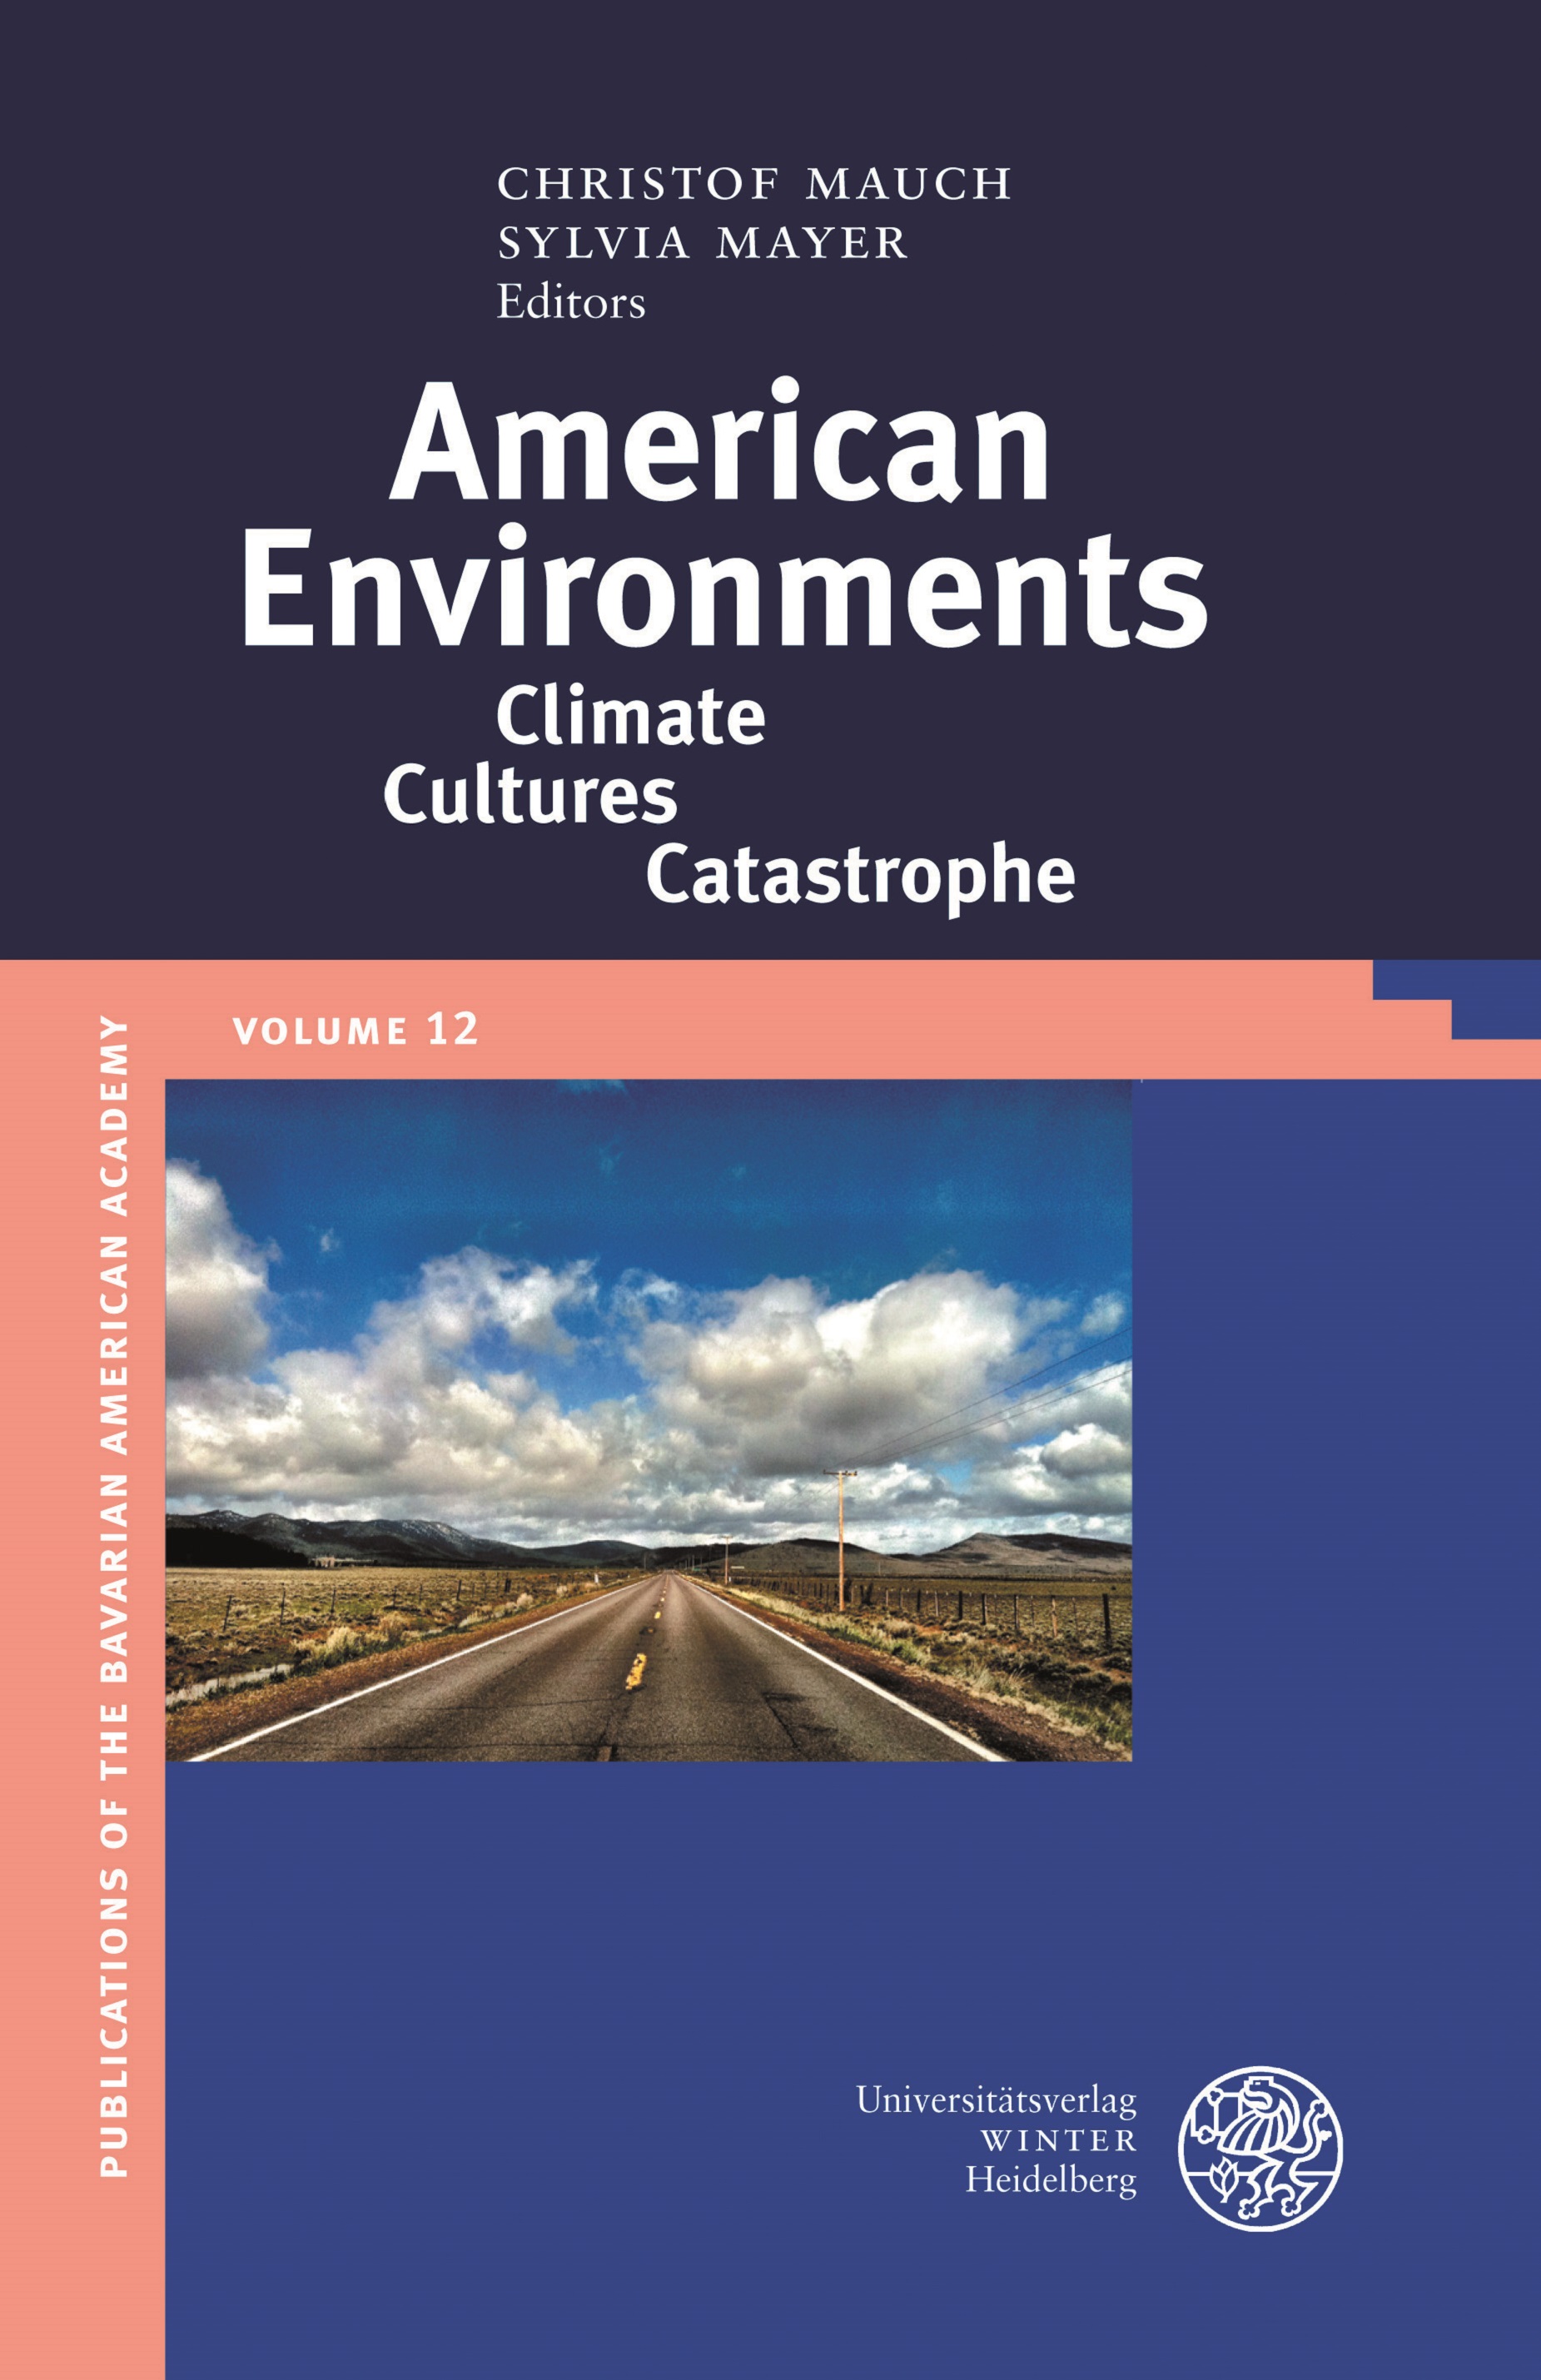 BAA-Publikation Vol. 12 American Environments: Climate, Cultures, Catastrophe